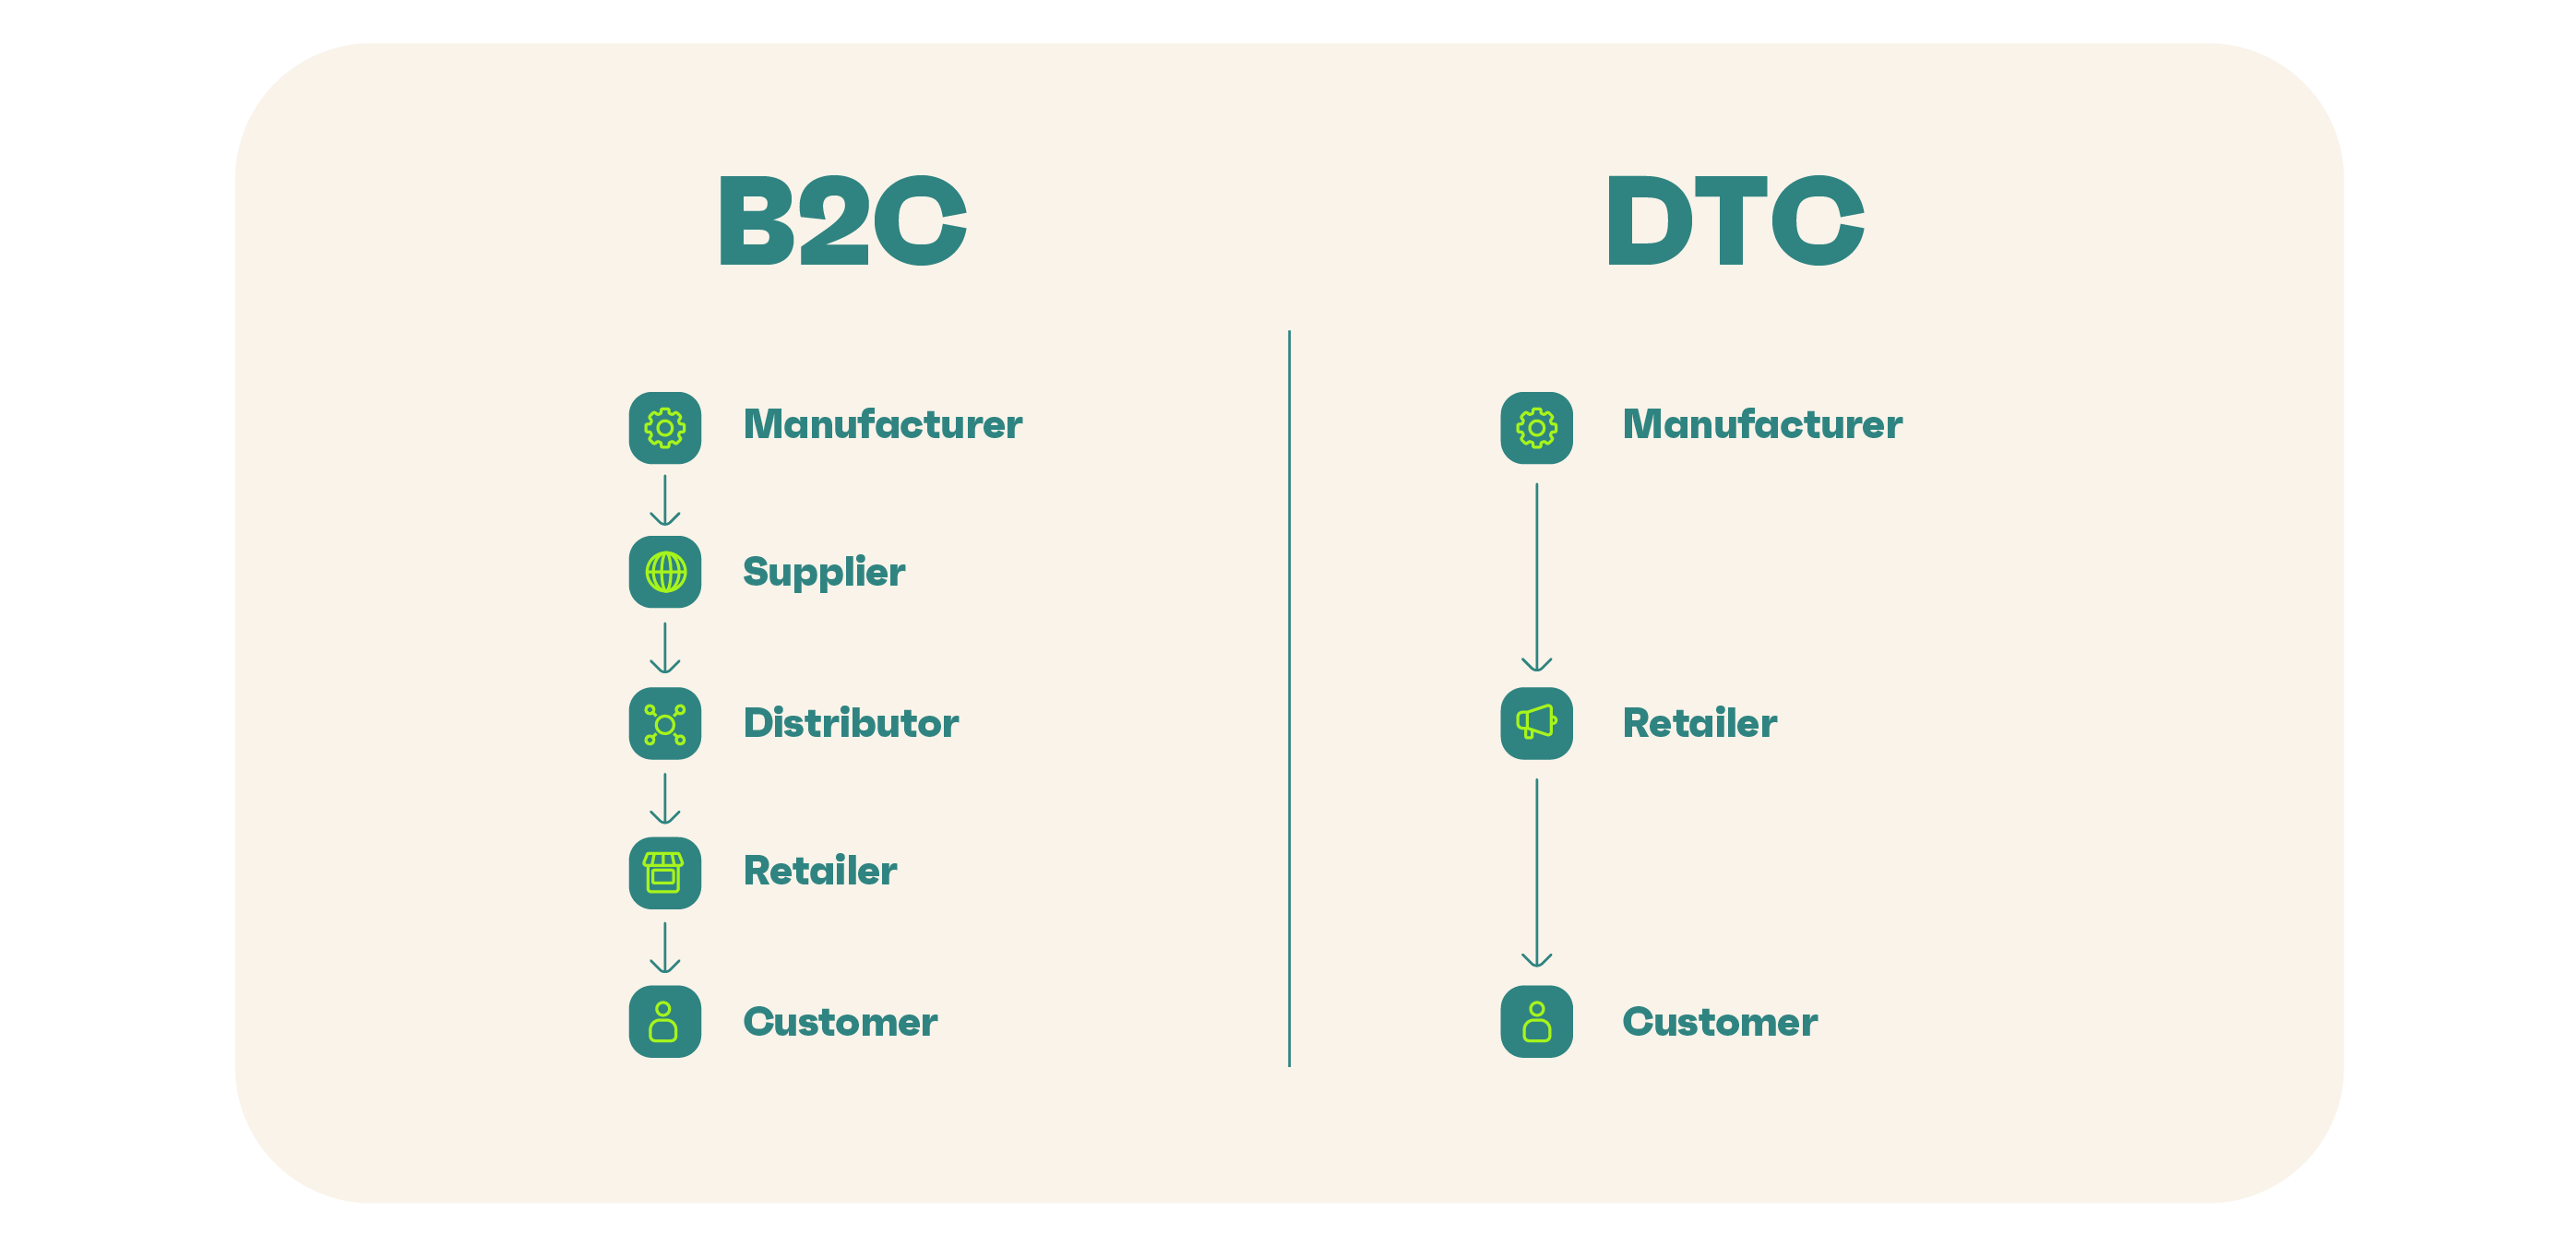 DTC marketing: DTC vs B2C